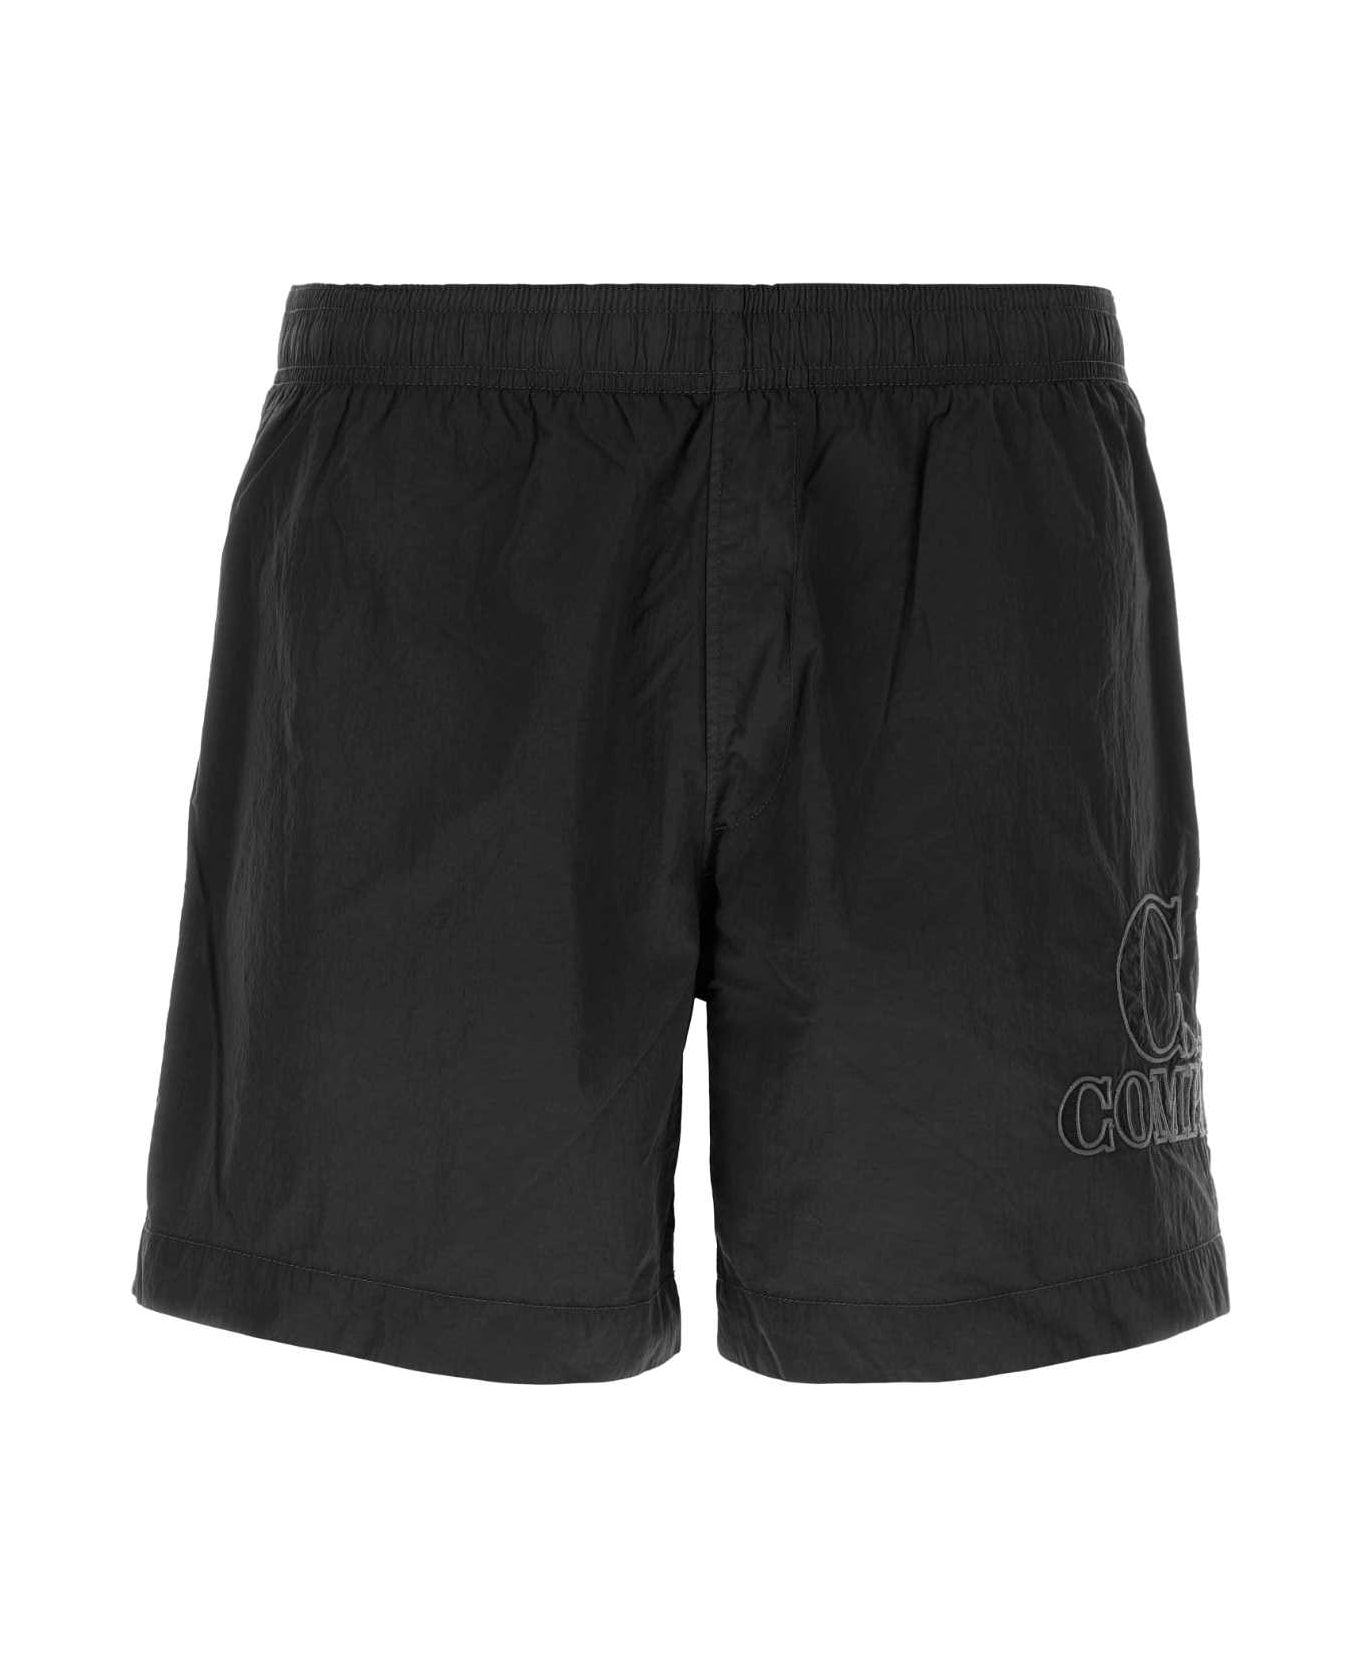 C.P. Company Black Nylon Swimming Shorts - Black